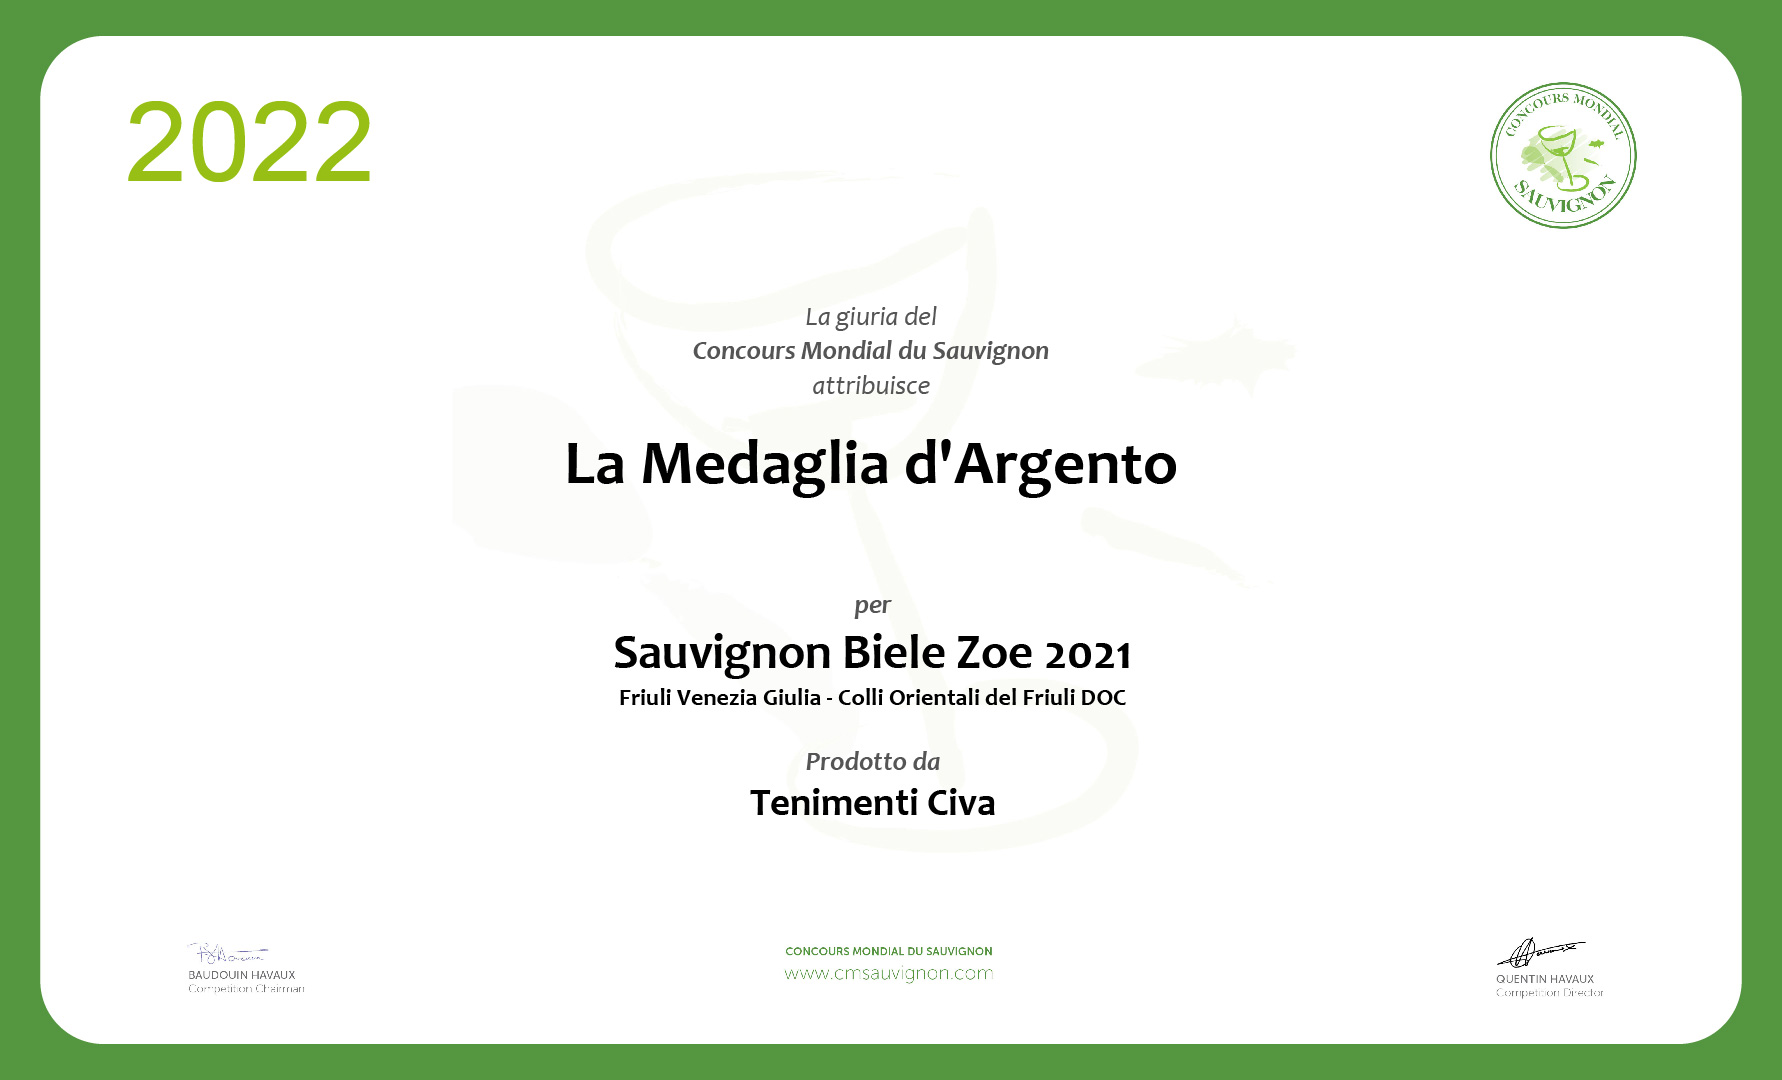 Sauvignon Biele Zôe è medaglia d’argento al Concours Mondial du Sauvignon 2022